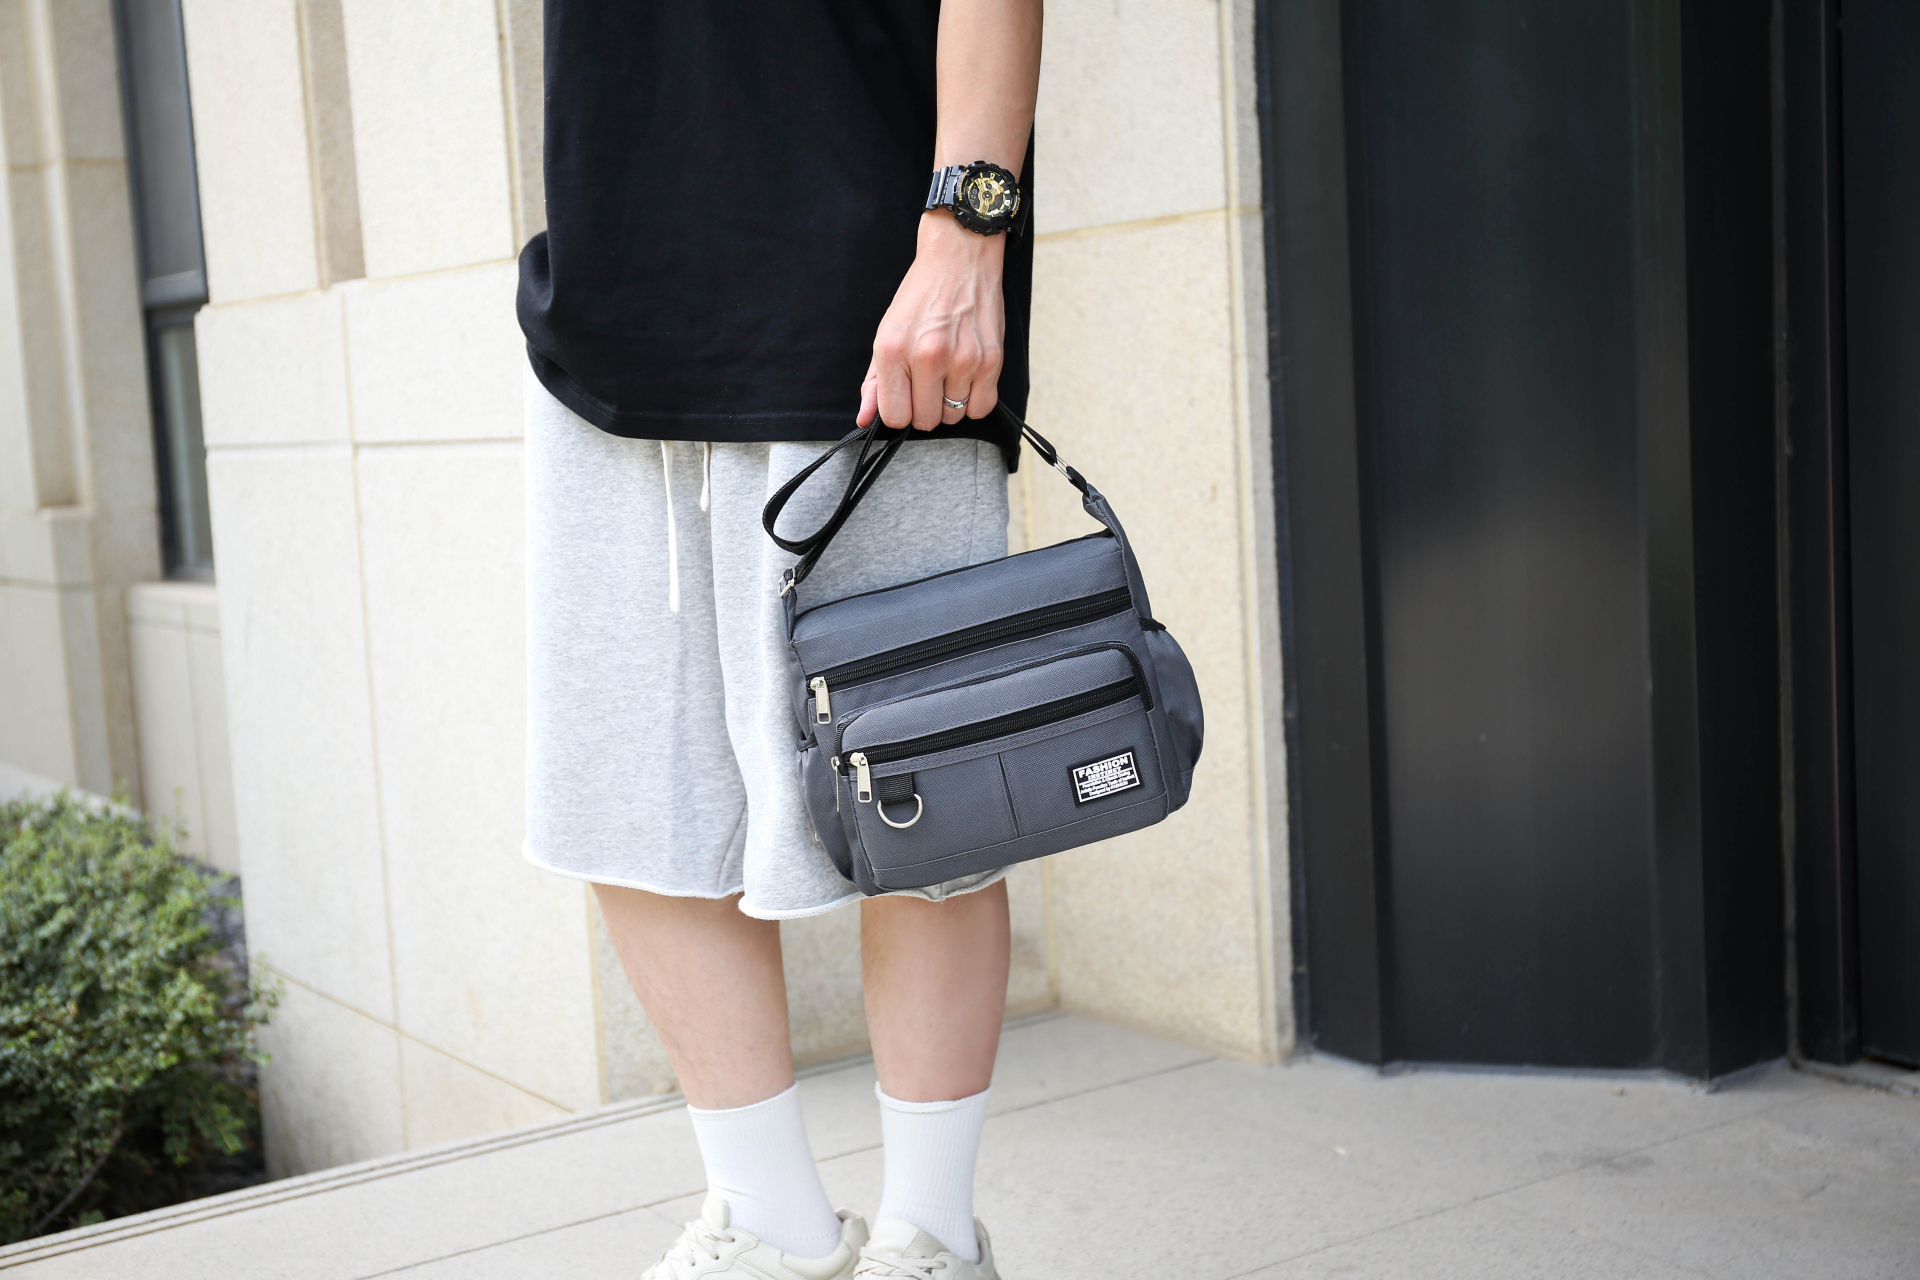 Men's Fashion Nylon Crossbody Bag Multifunctional Male Shoulder Messenger  Bags Large Satchels Business Bolsa Masculina XA292ZC